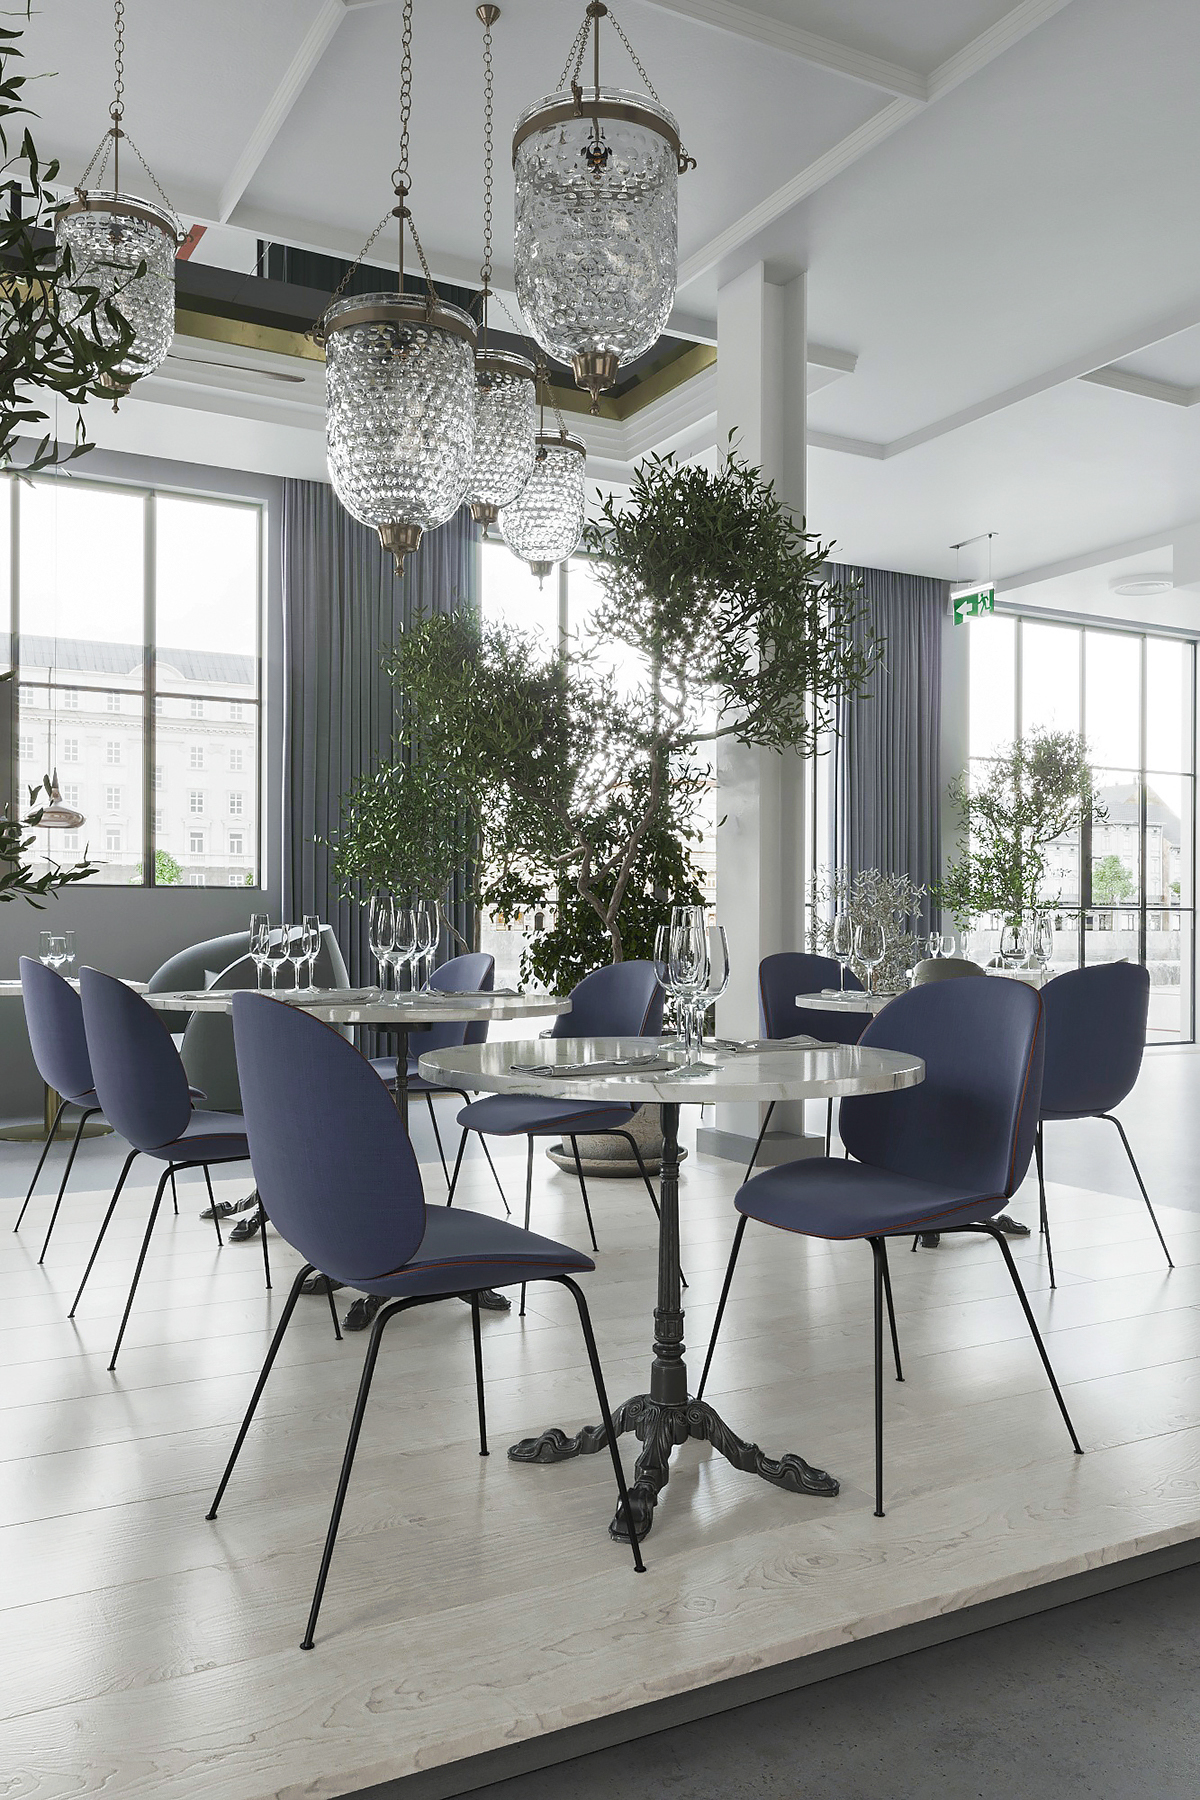 Render architecture CGI corona renderer Interior restaurant hotel hotel design VisEngine restaurant design